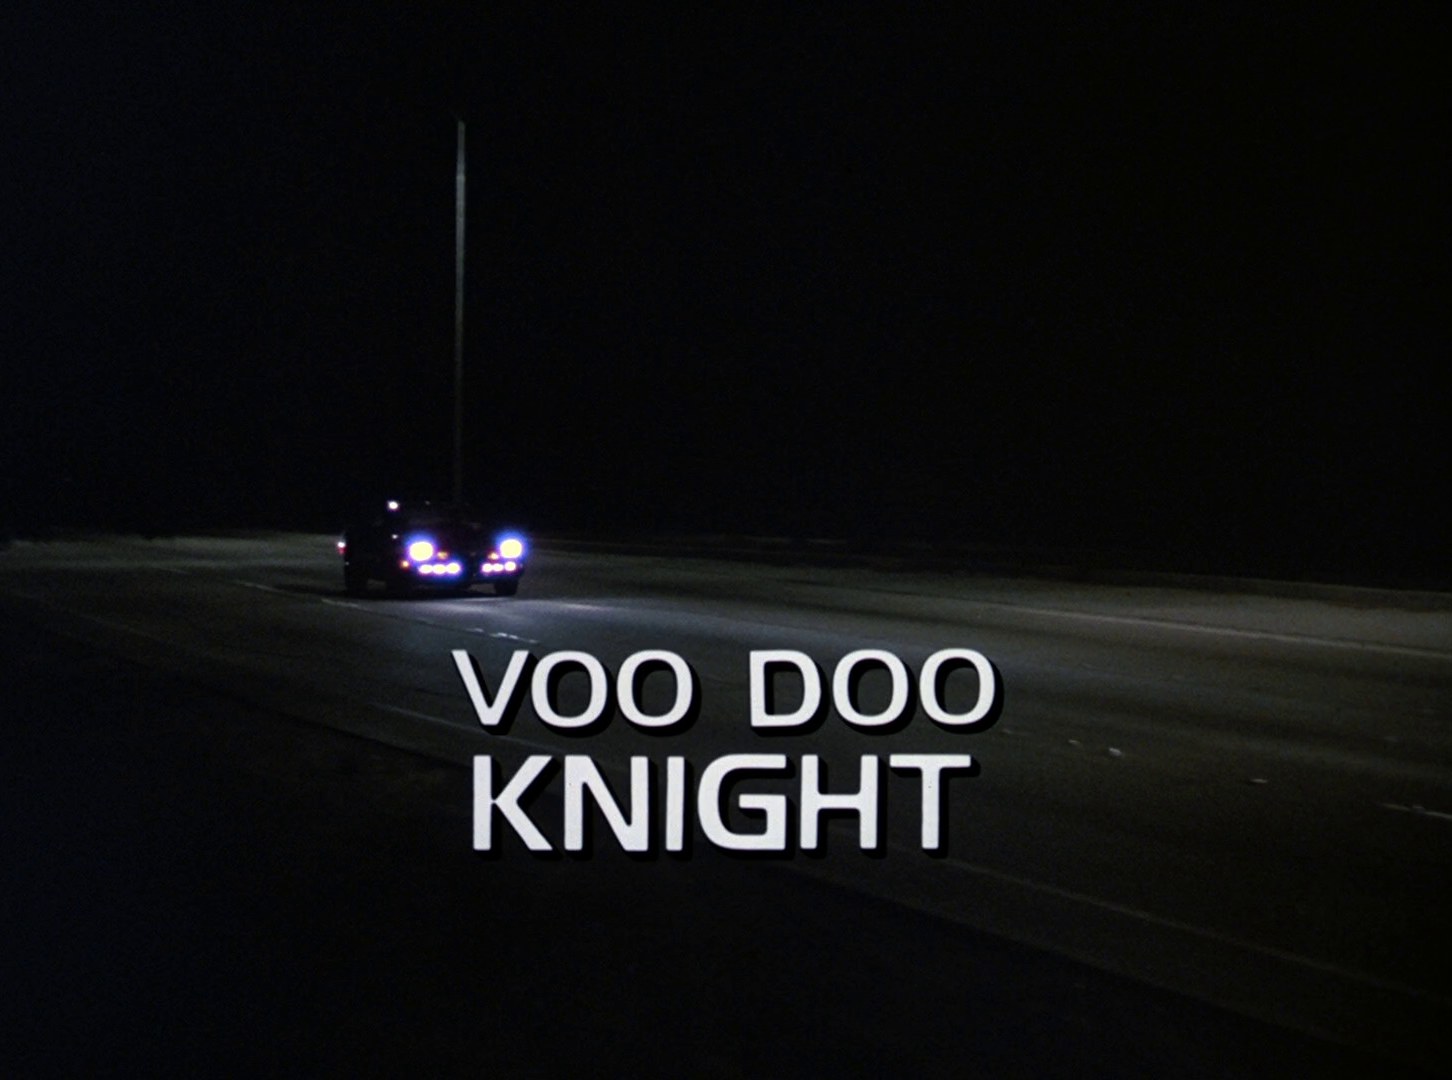 Knight Rider Season 4 - Episode 84 - Voo Doo Knight - Photo 1